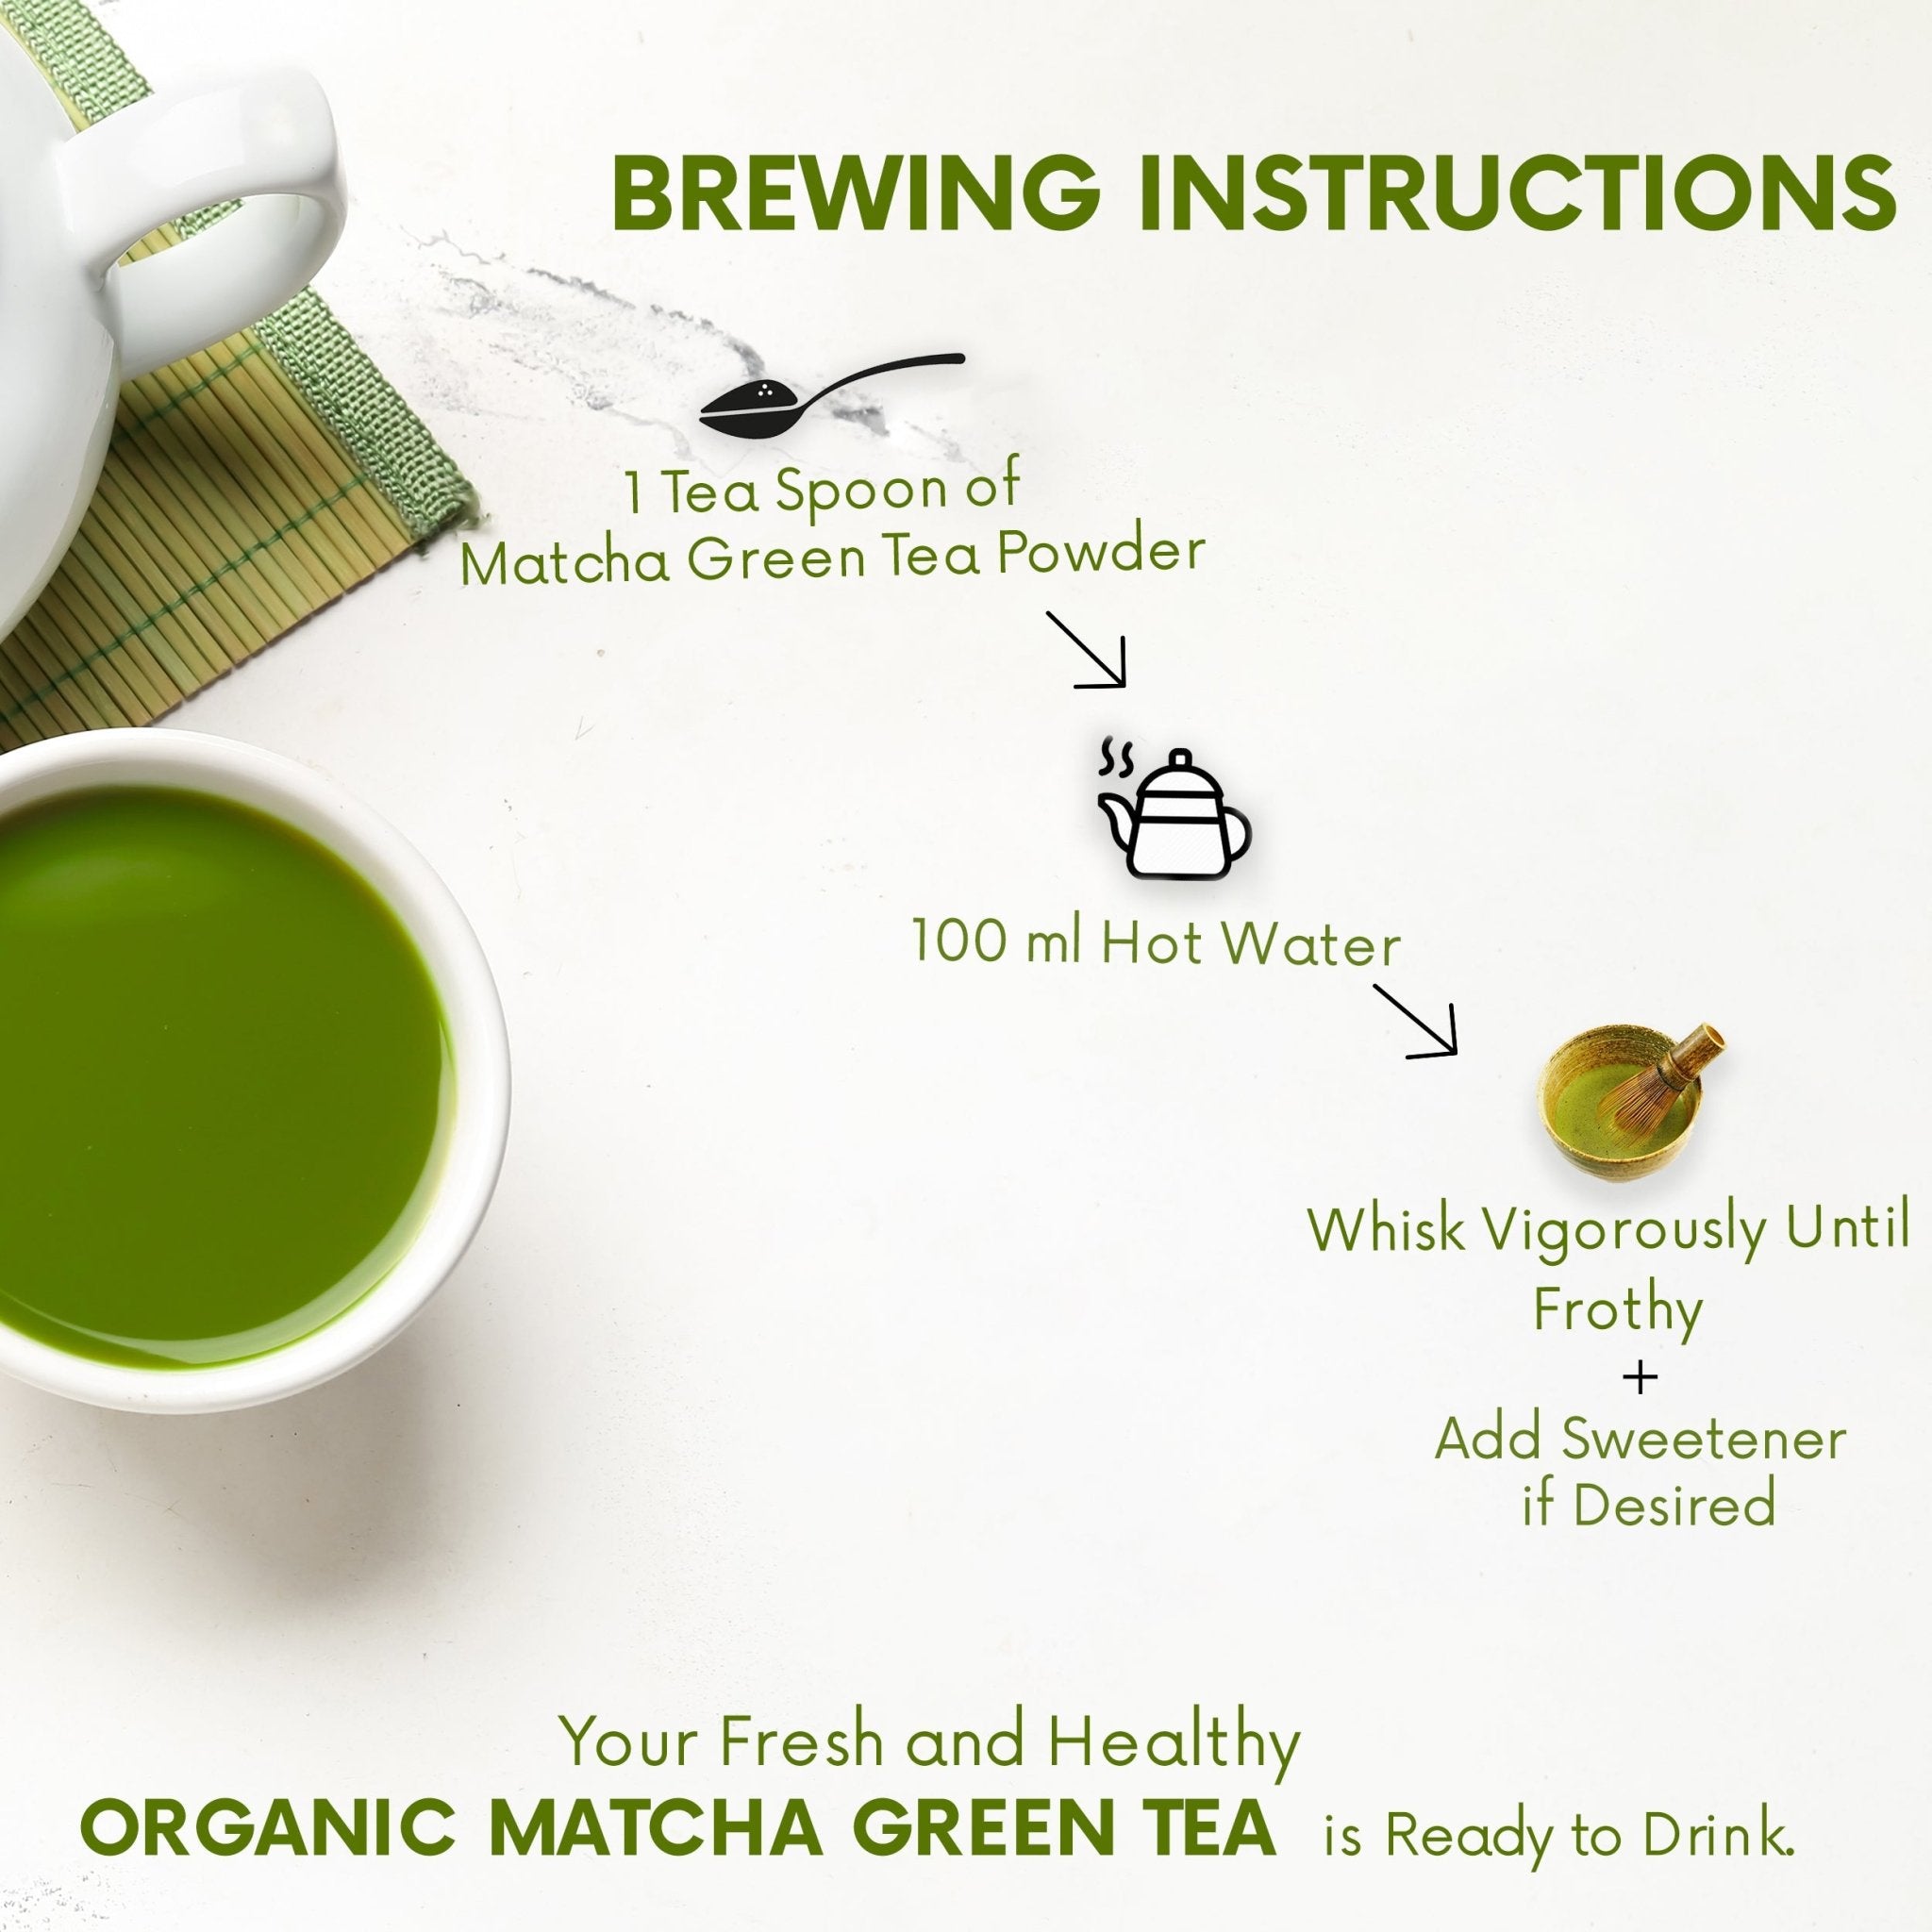 The Tea Ark Organic Matcha Green Tea Powder, Japanese Superfood (20 Cups), 50g - Inlife Pharma Private Limited